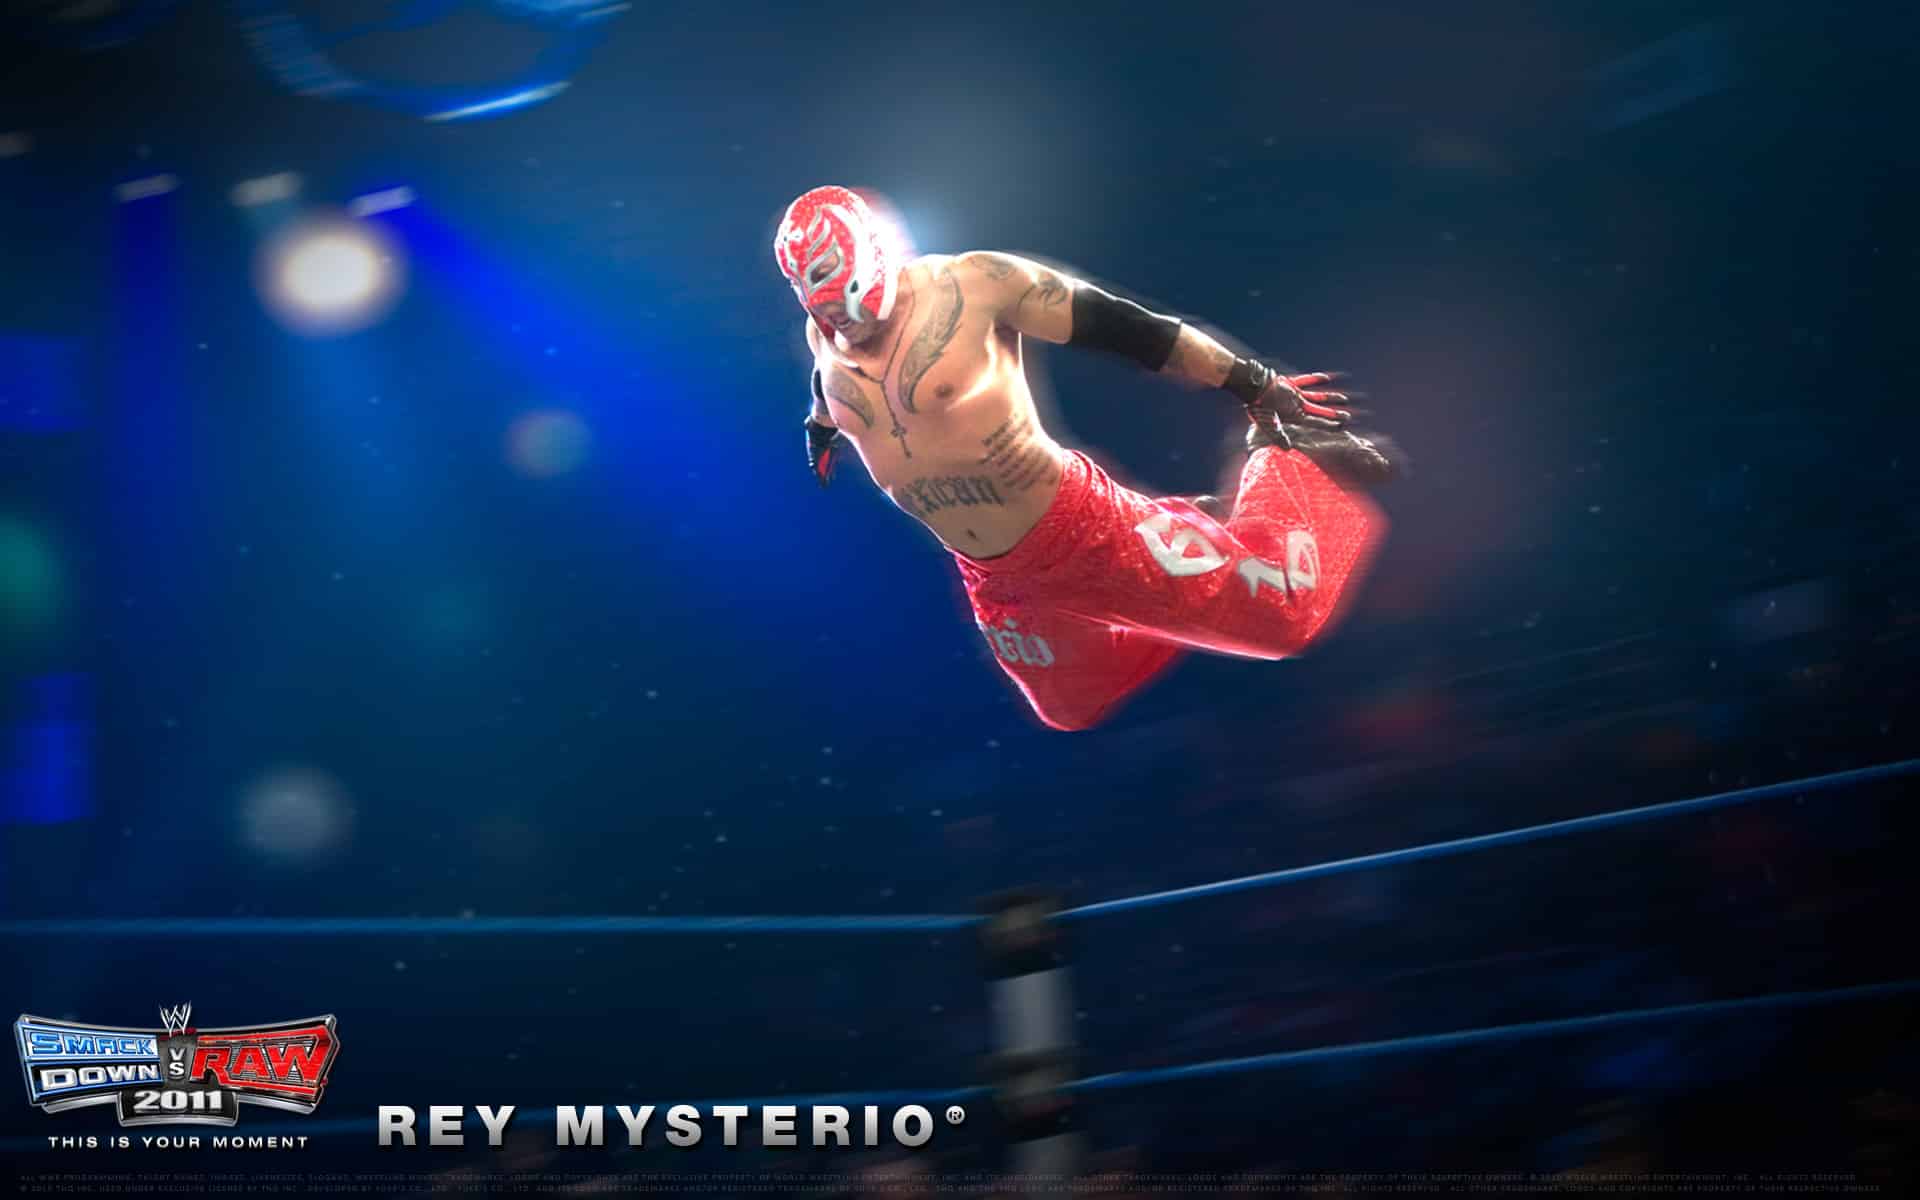 wwe-smackdown-vs-raw-2011-rey-mysterio-wallpaper